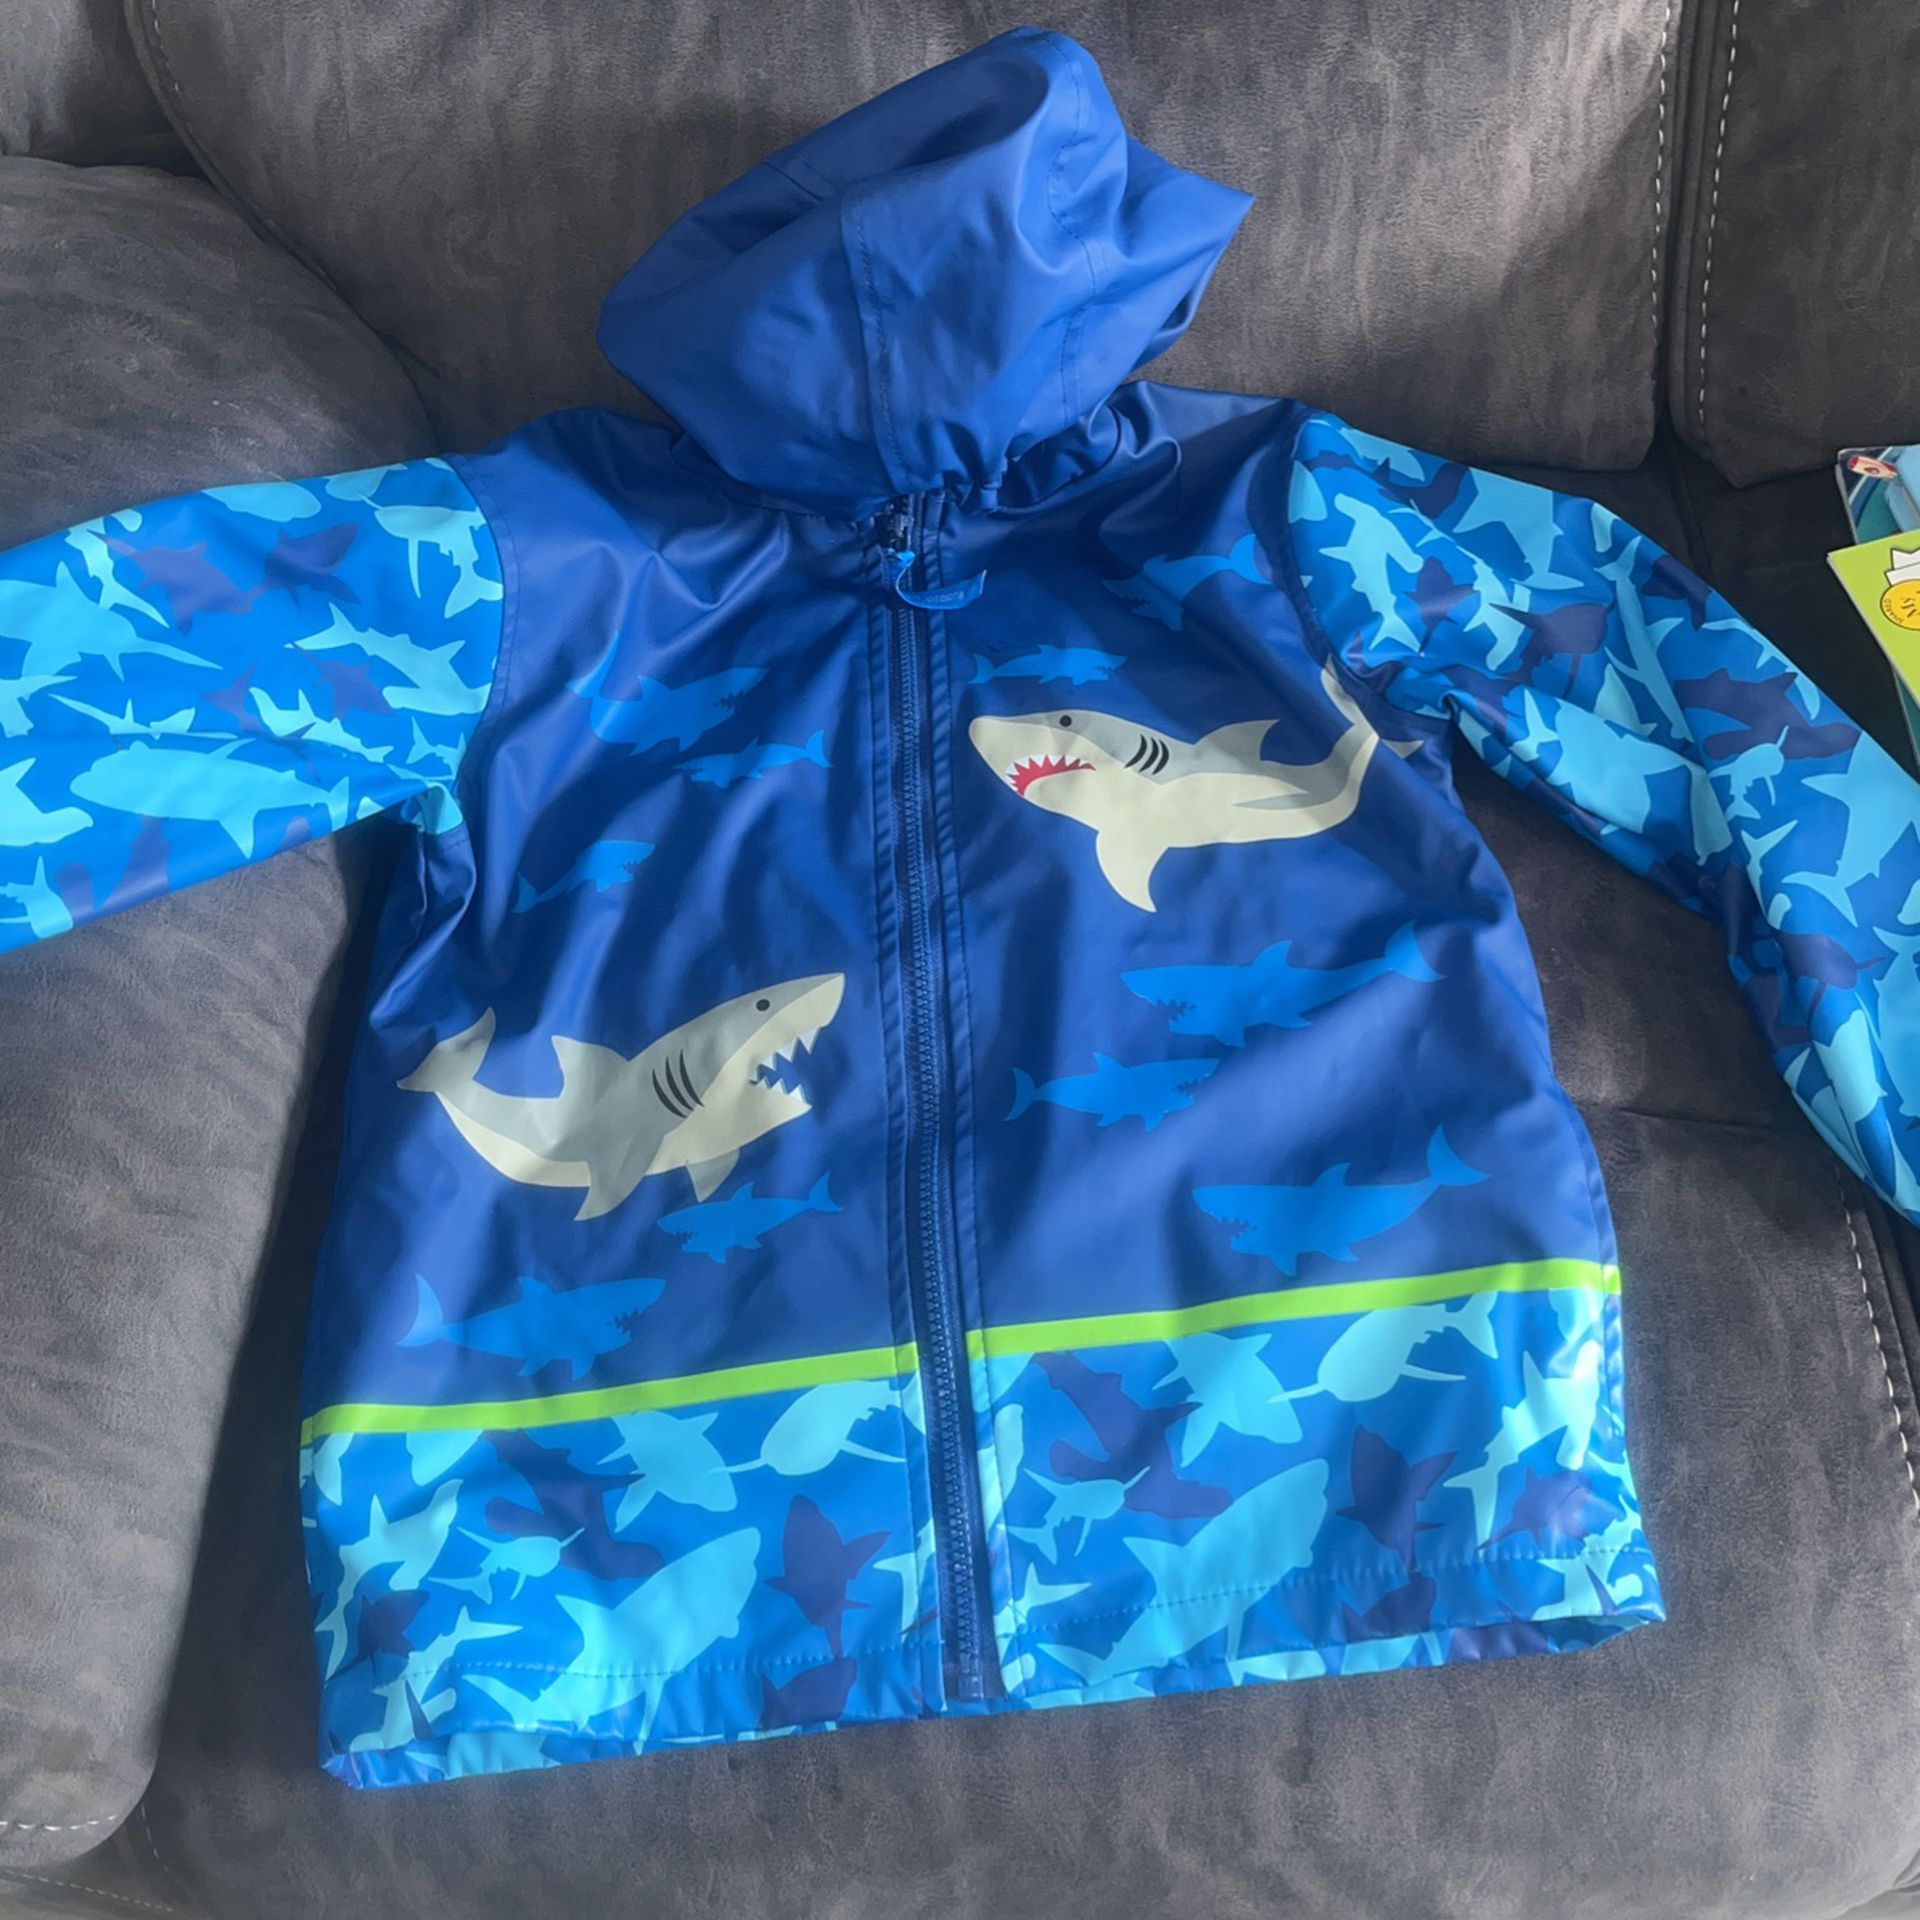 Rain 🌧️ Jacket Size 5/6 $5